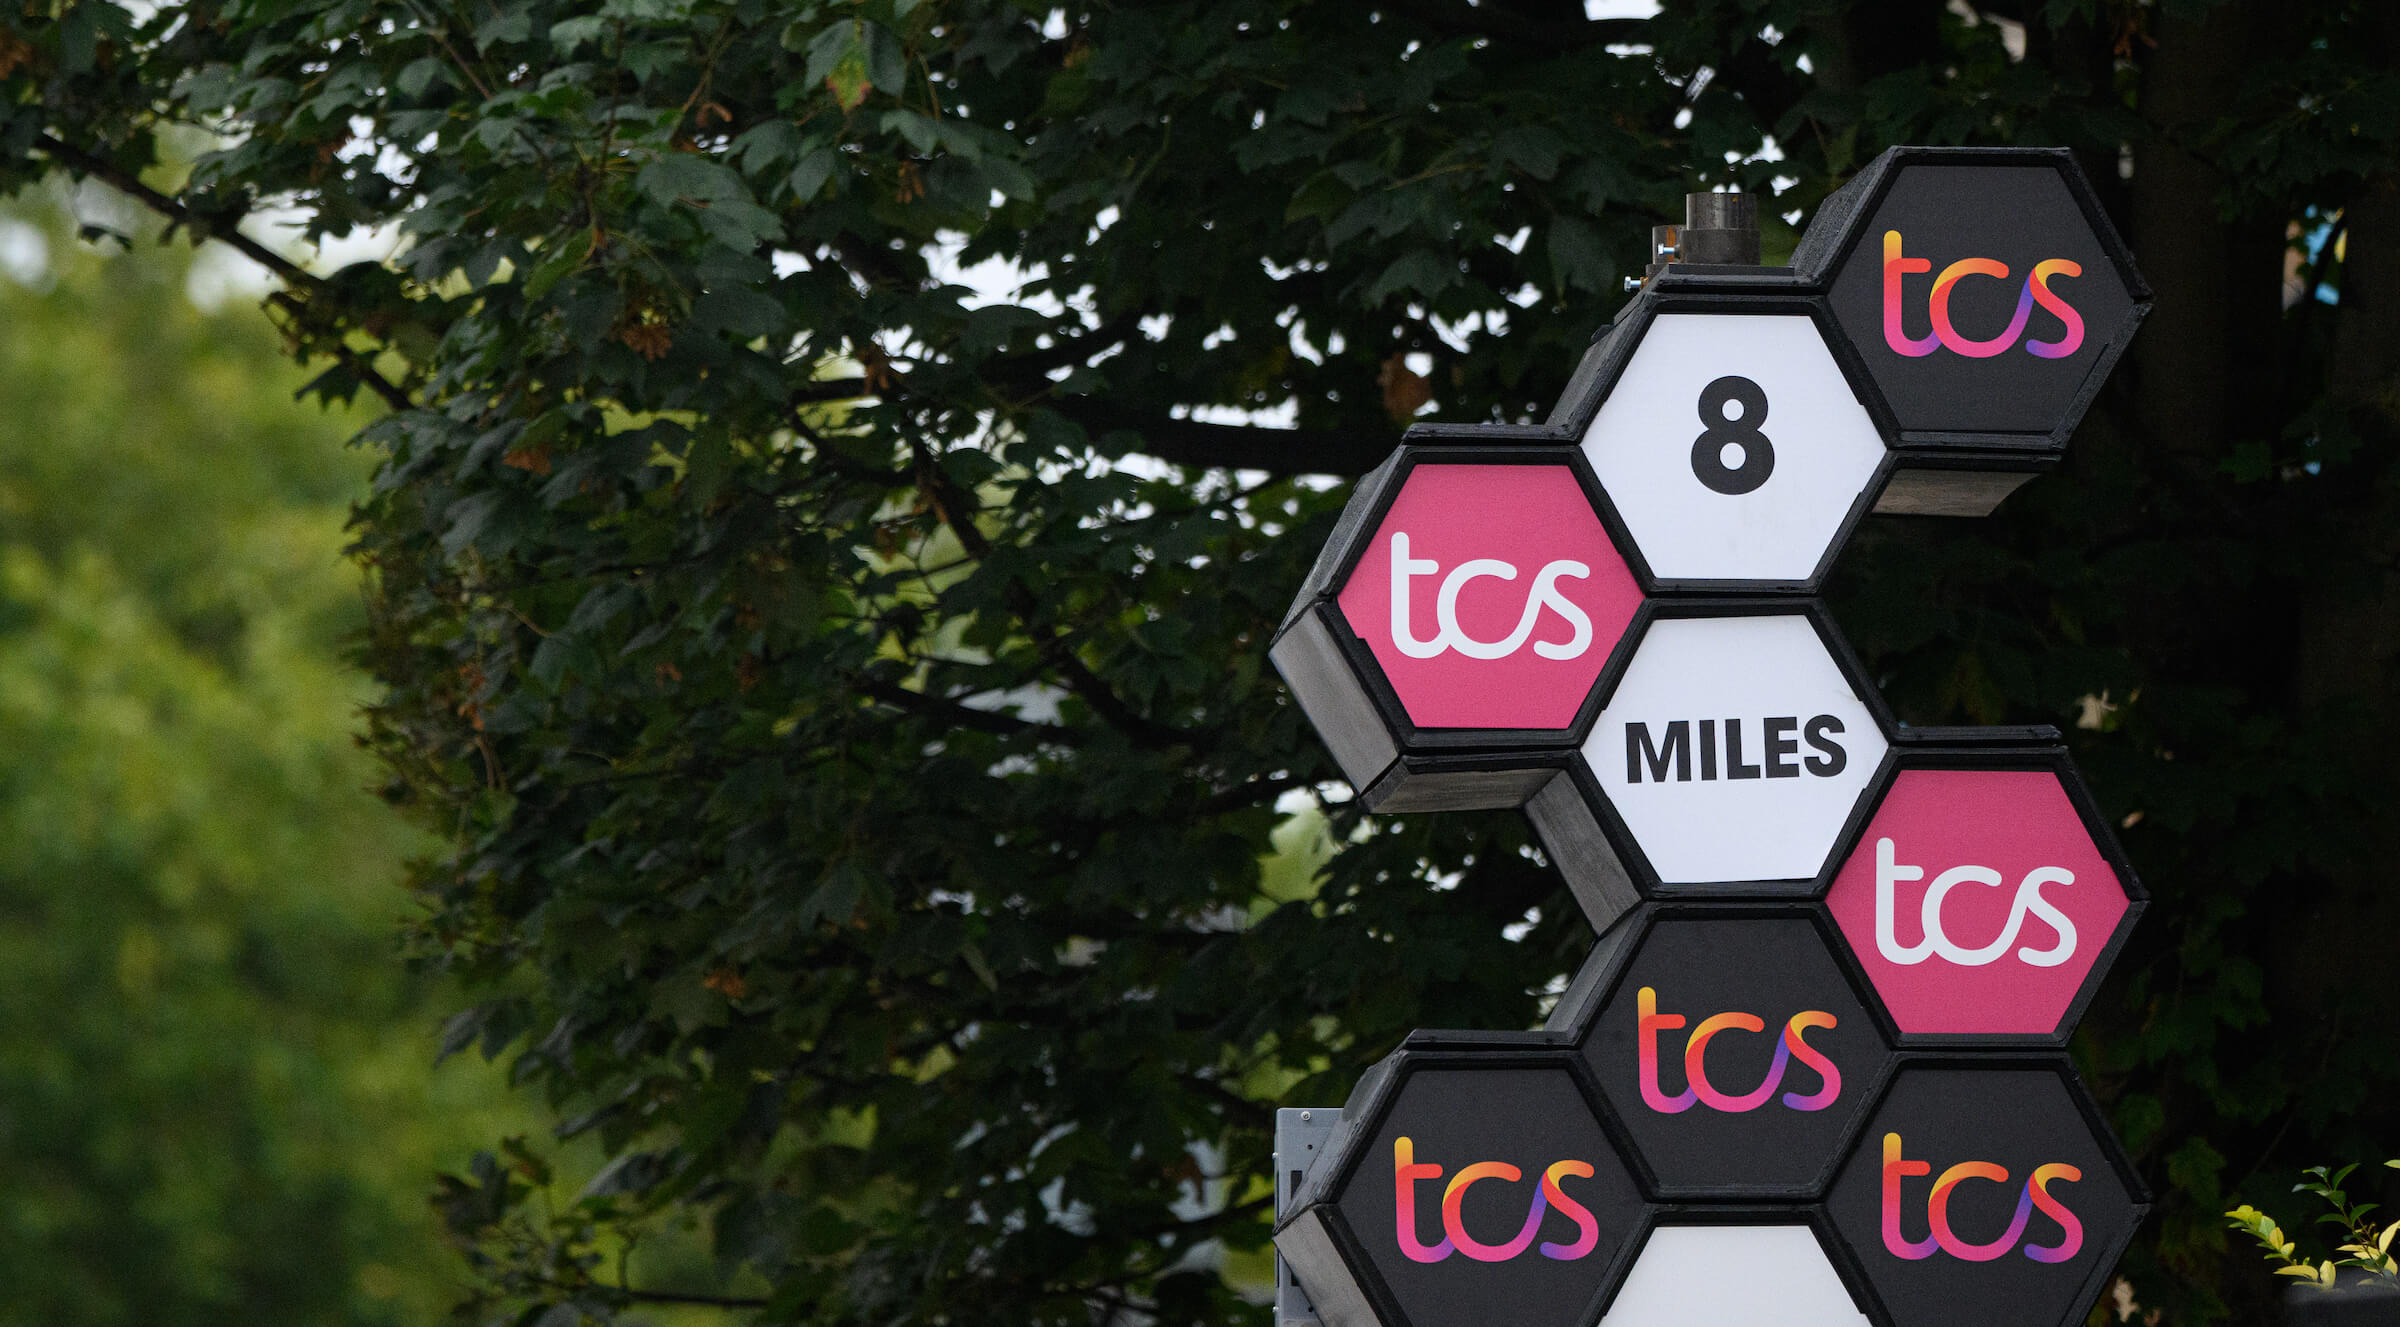 A TCS London Marathon mile marker